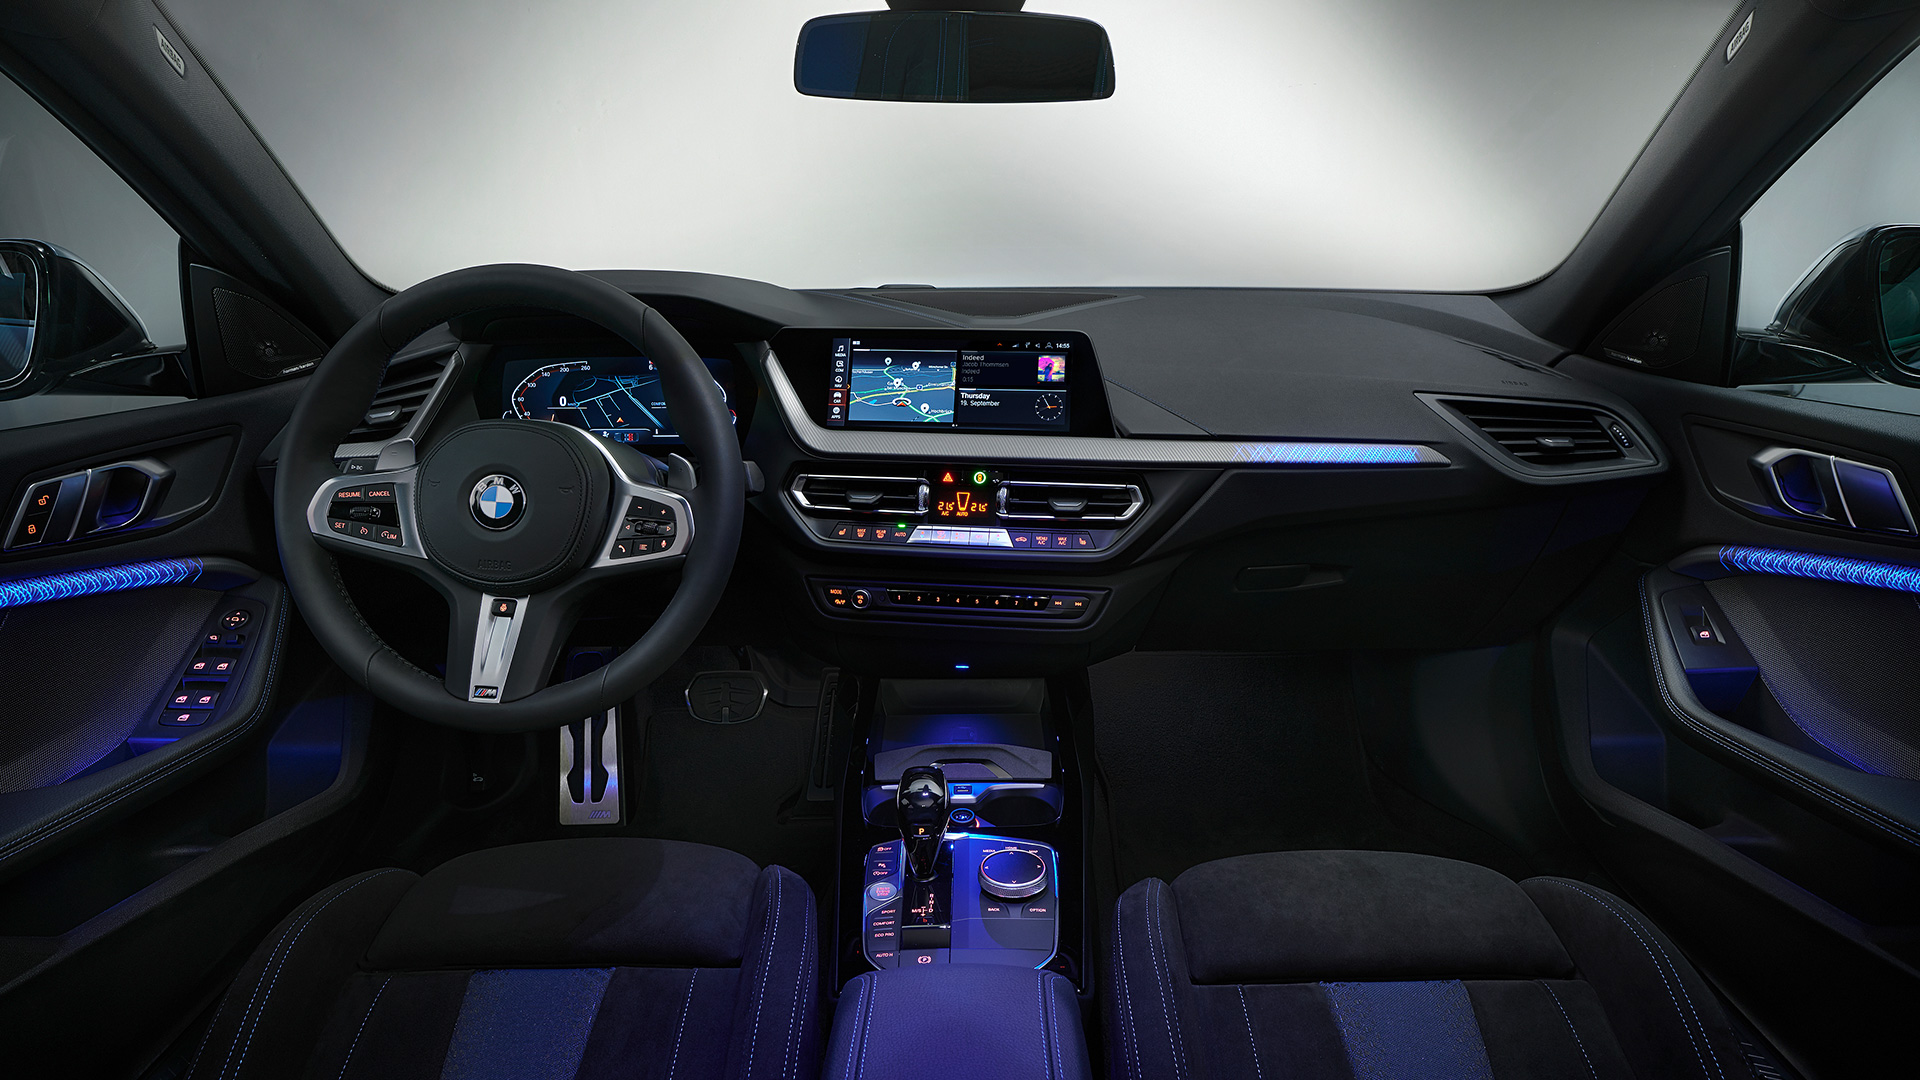 BMW 220i interior - Cockpit